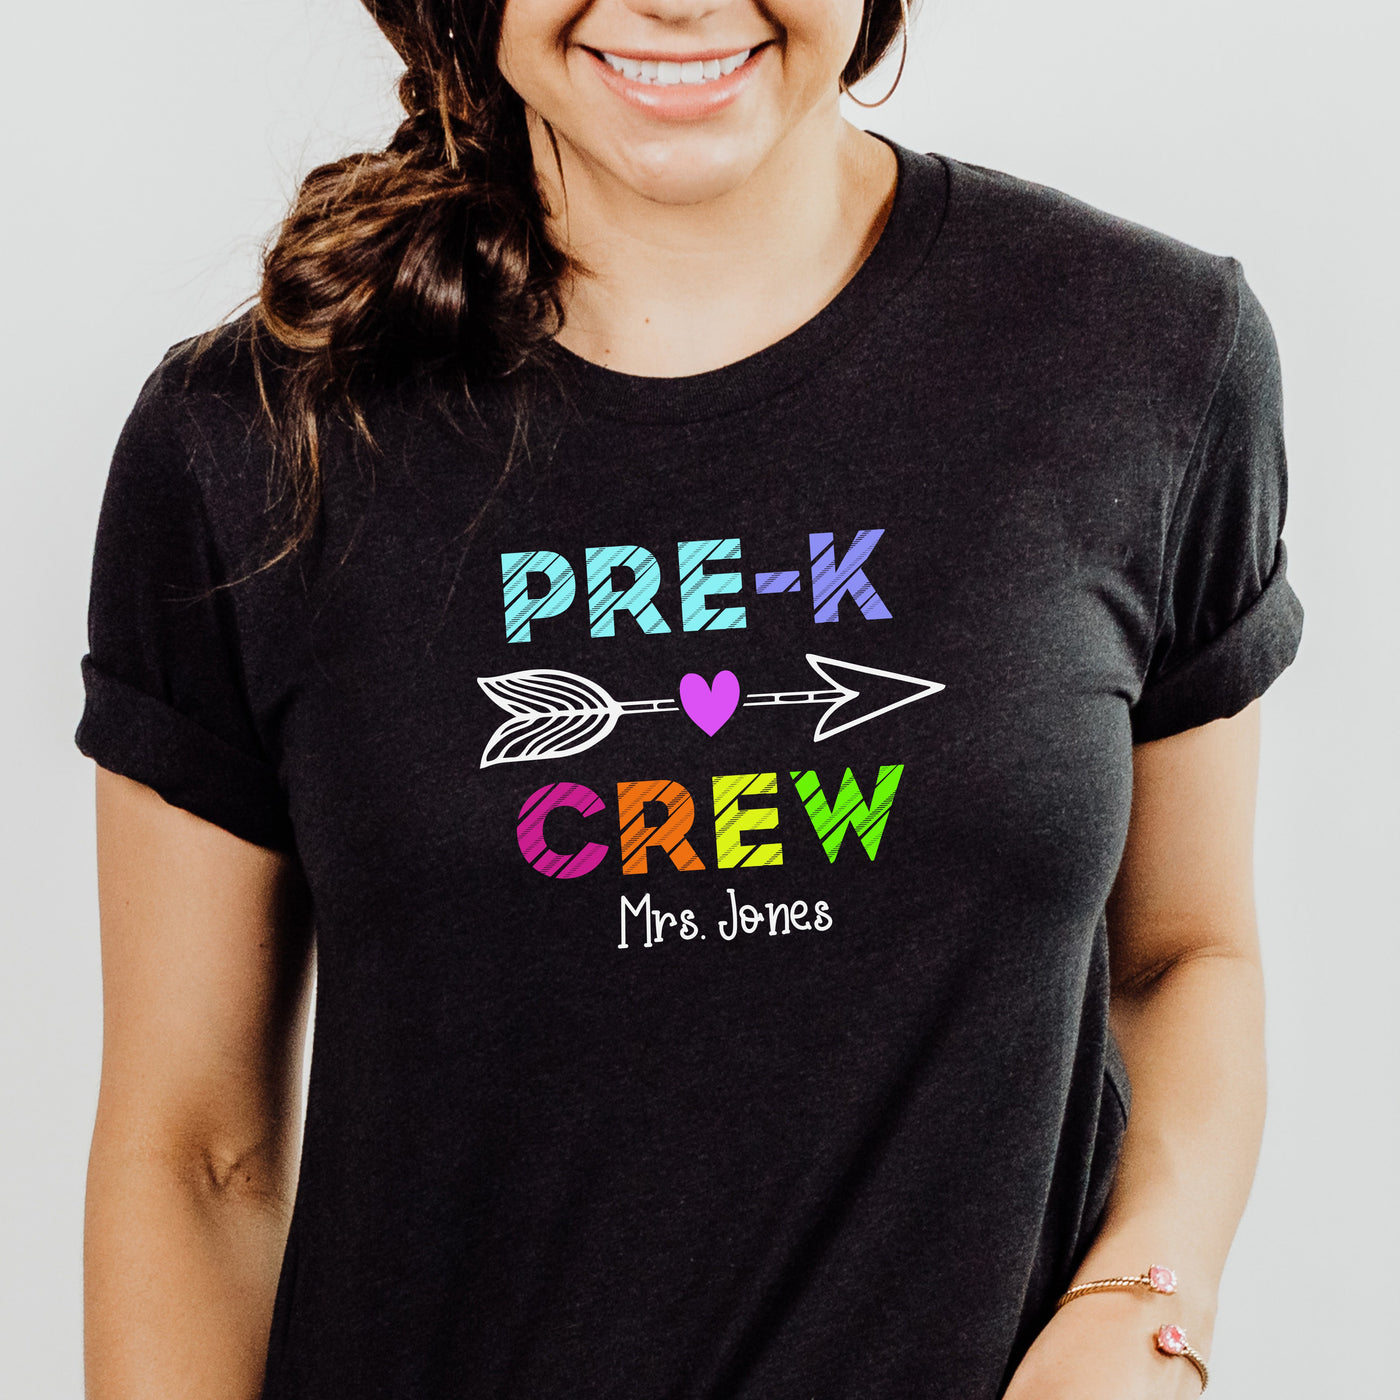 Pre-K Crew Back to School Shirt for Preschool Teachers | Personalized Teacher Shirt